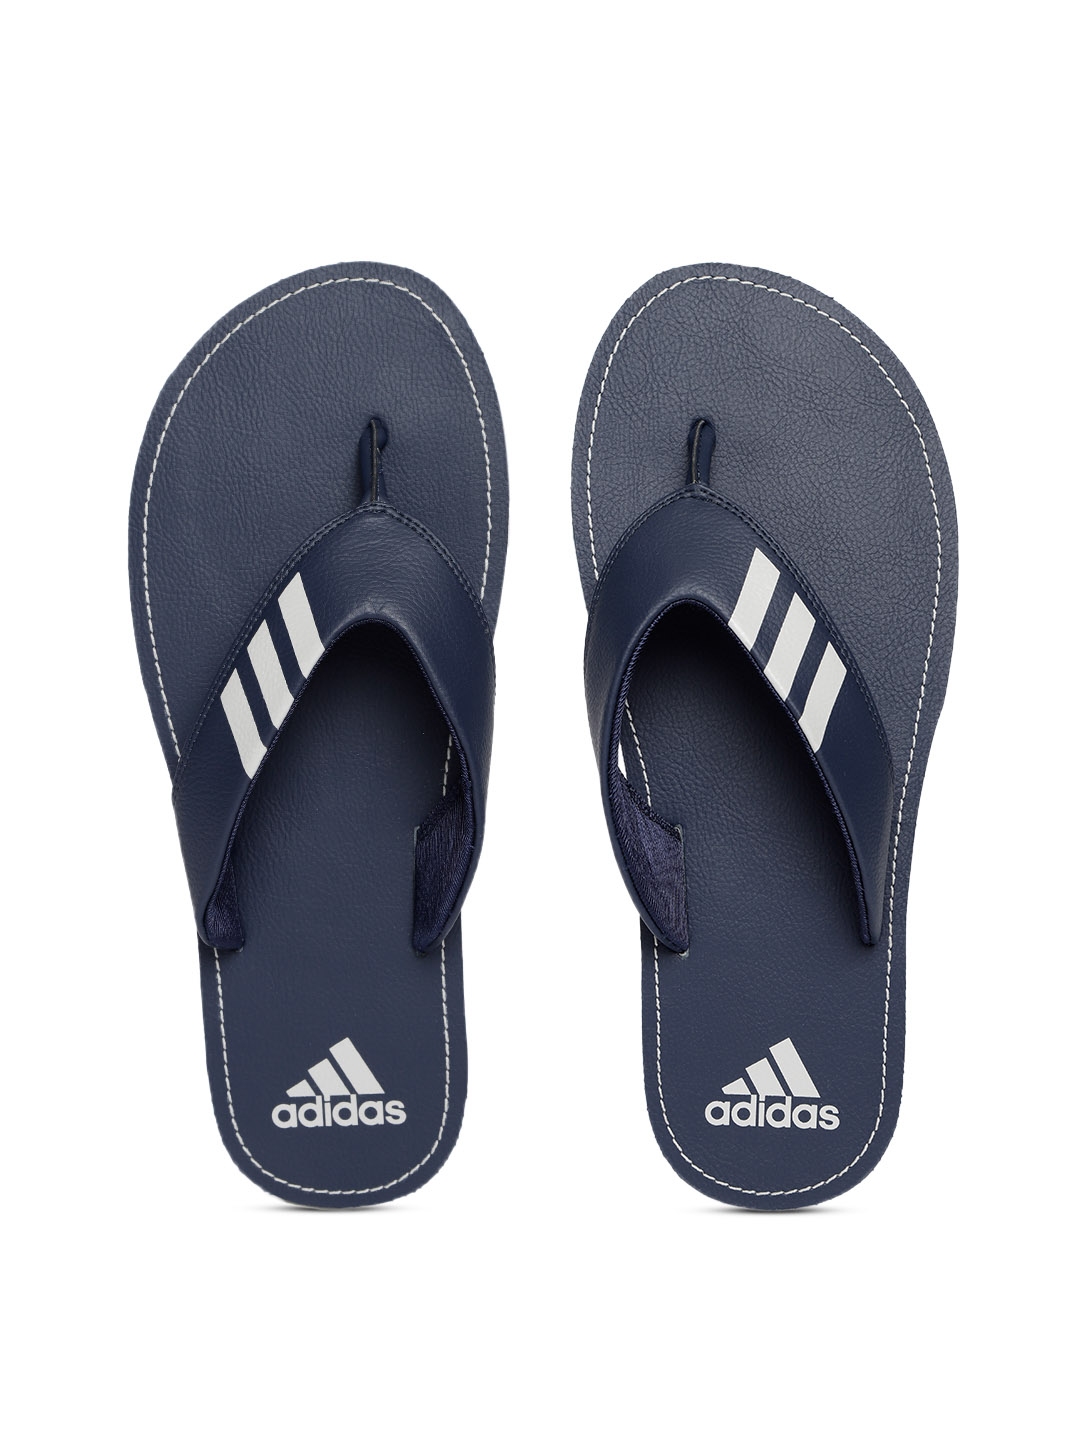 adidas swim coset 2018 slippers cheap 